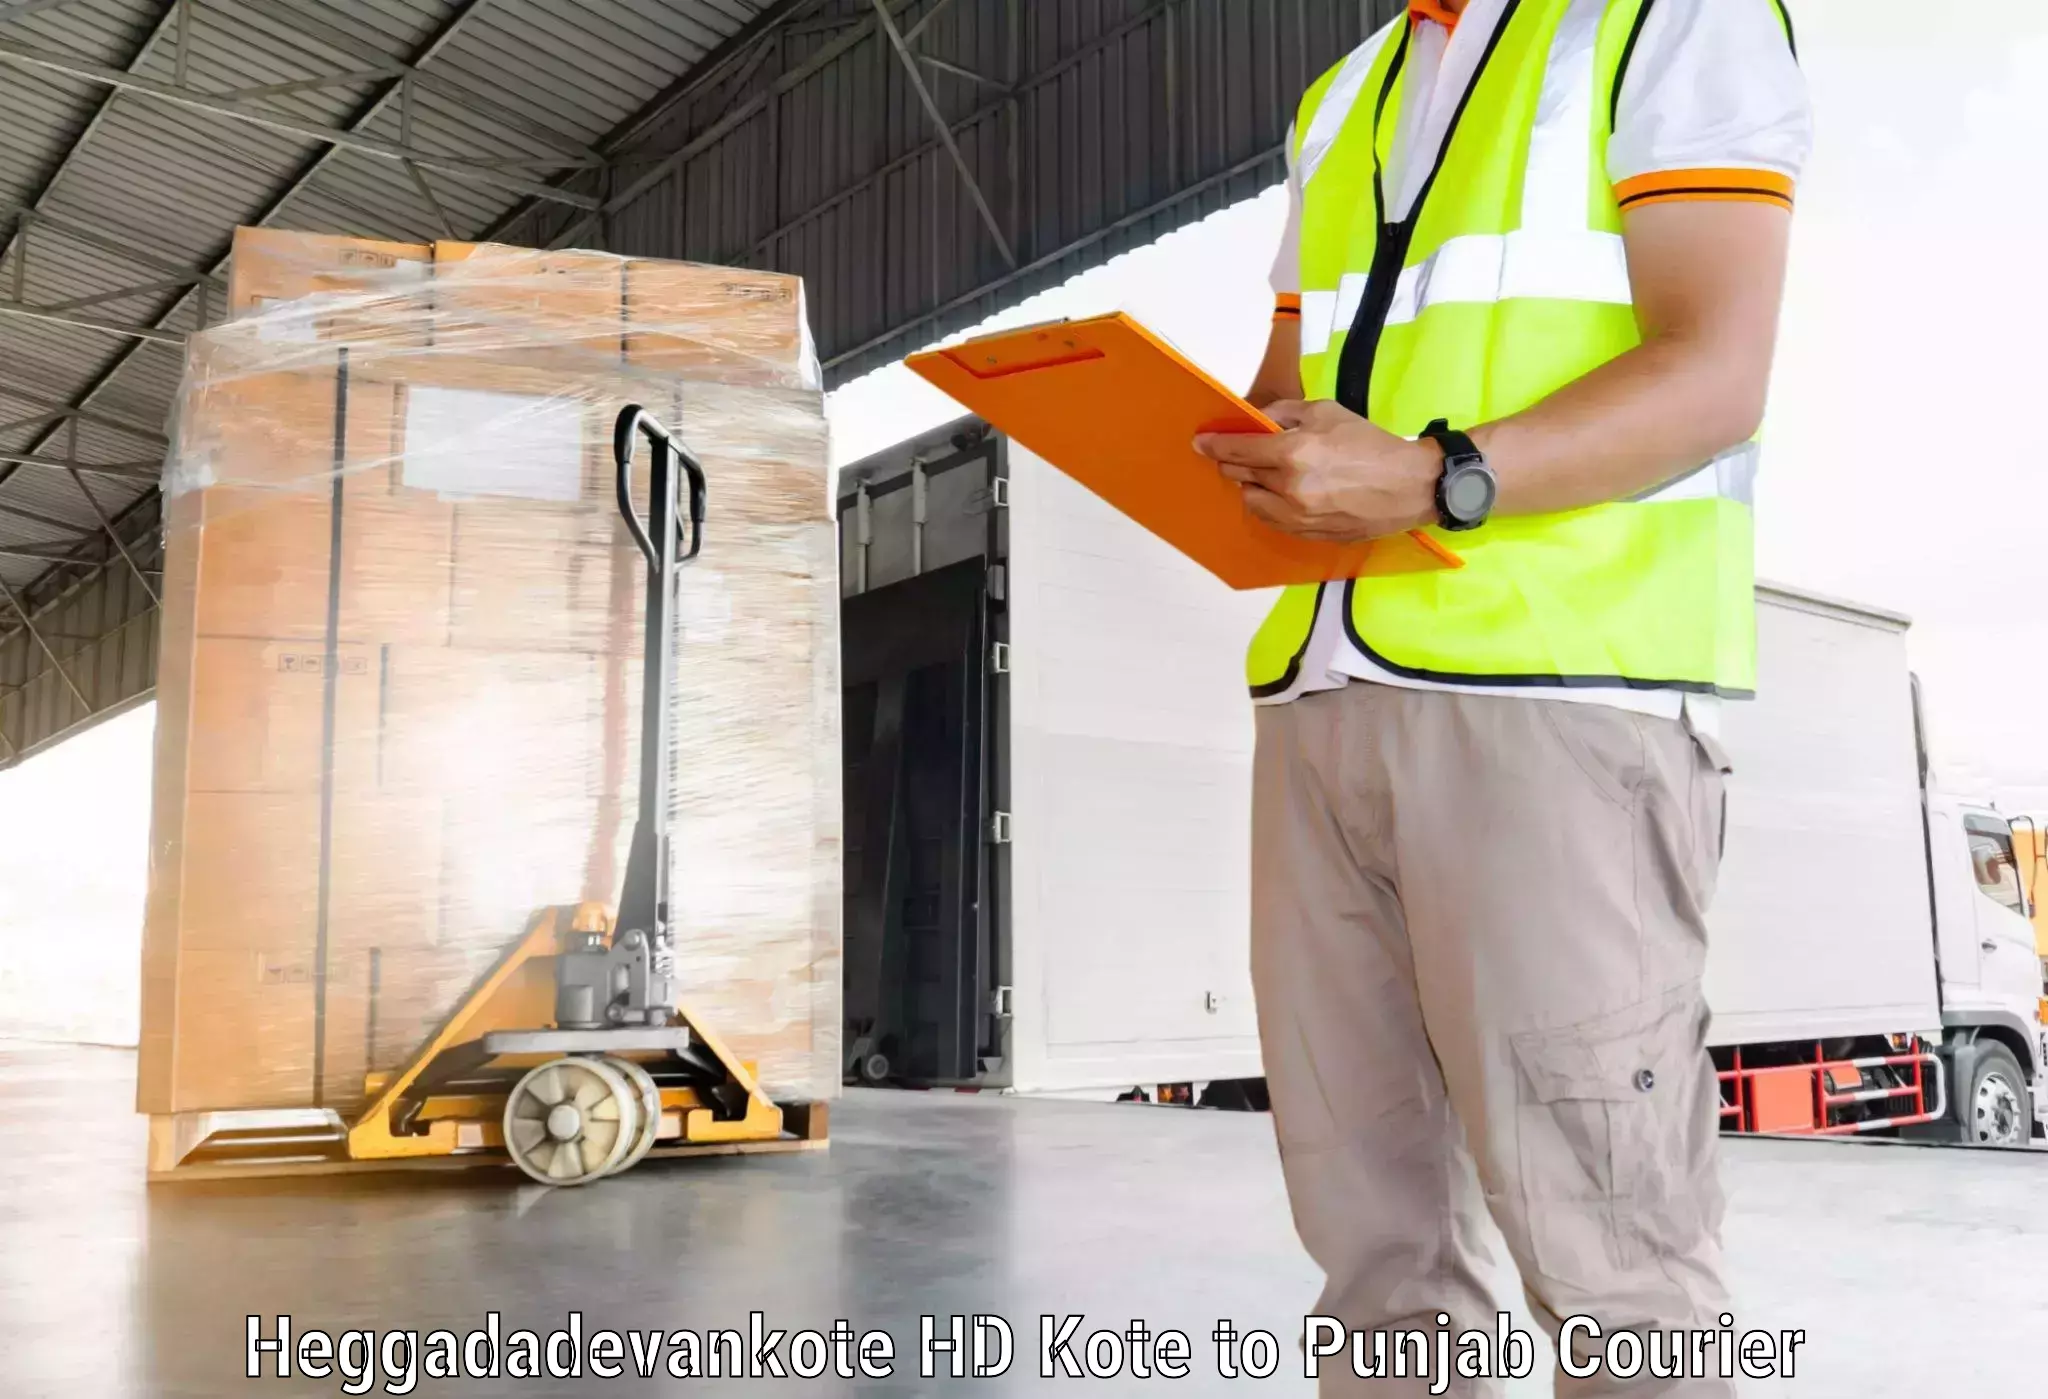 Budget-friendly shipping Heggadadevankote HD Kote to Punjab